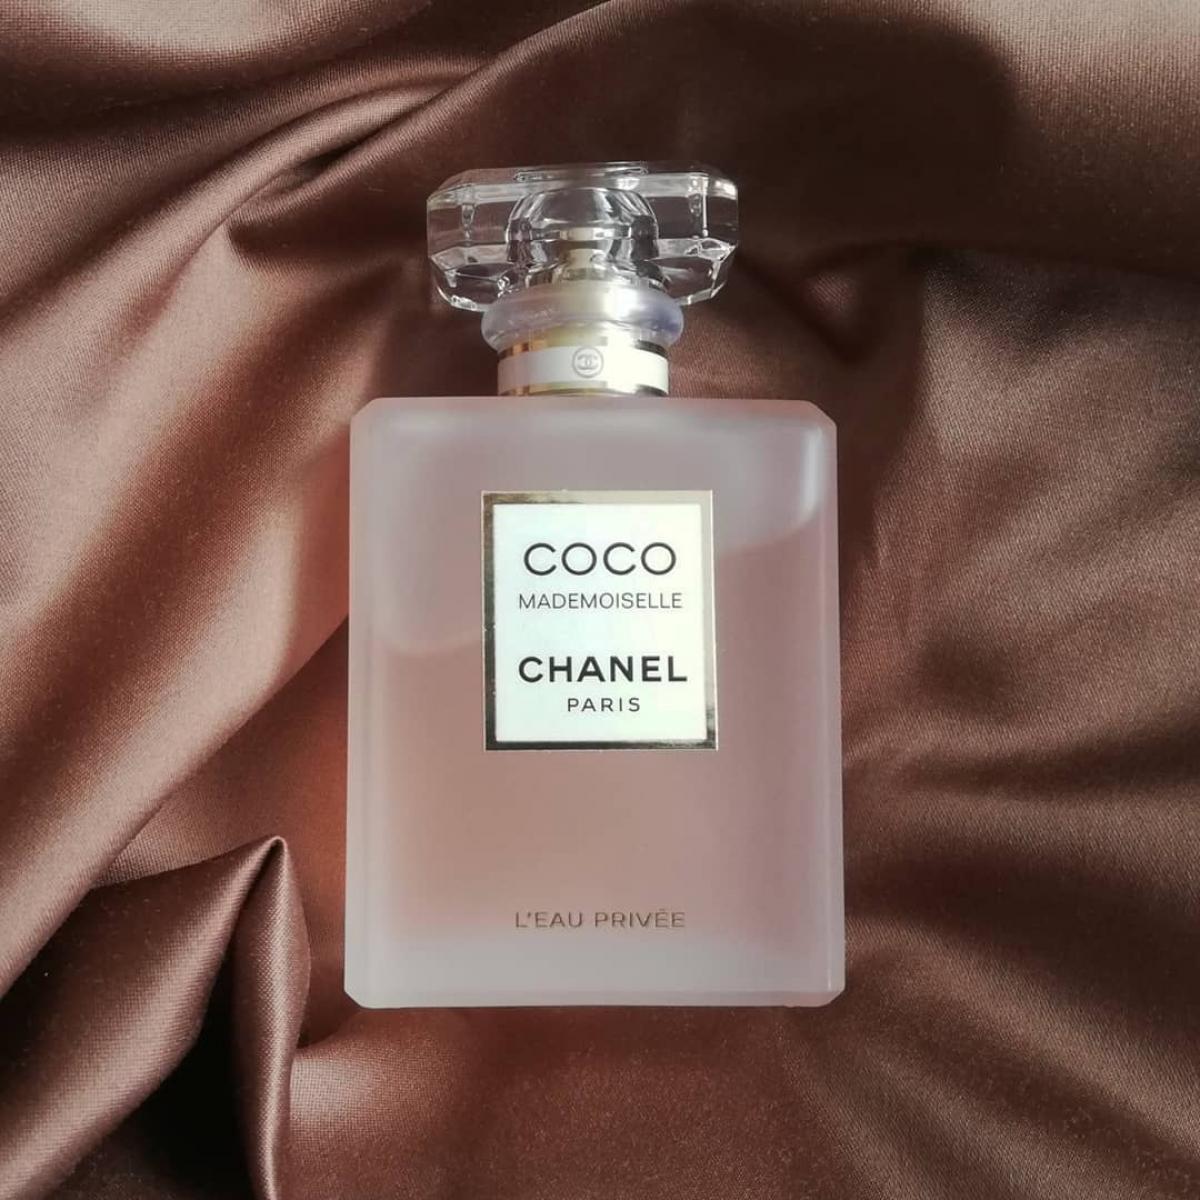 Coco Mademoiselle L'Eau Privée Chanel perfume - a fragrance for women 2020